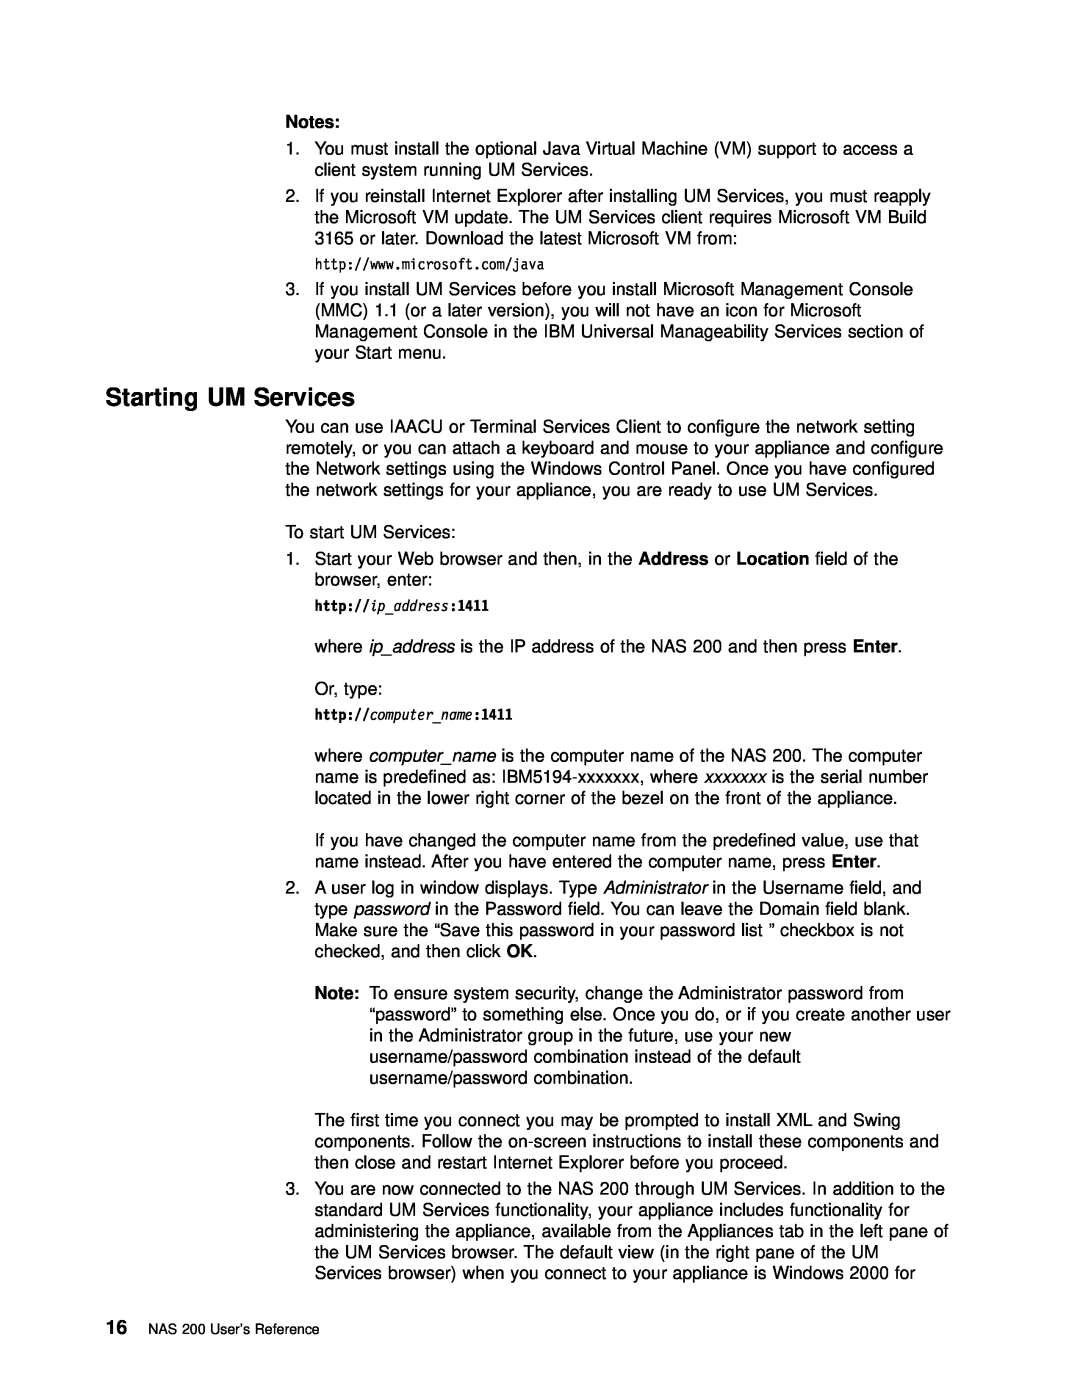 IBM 201 manual Starting UM Services 